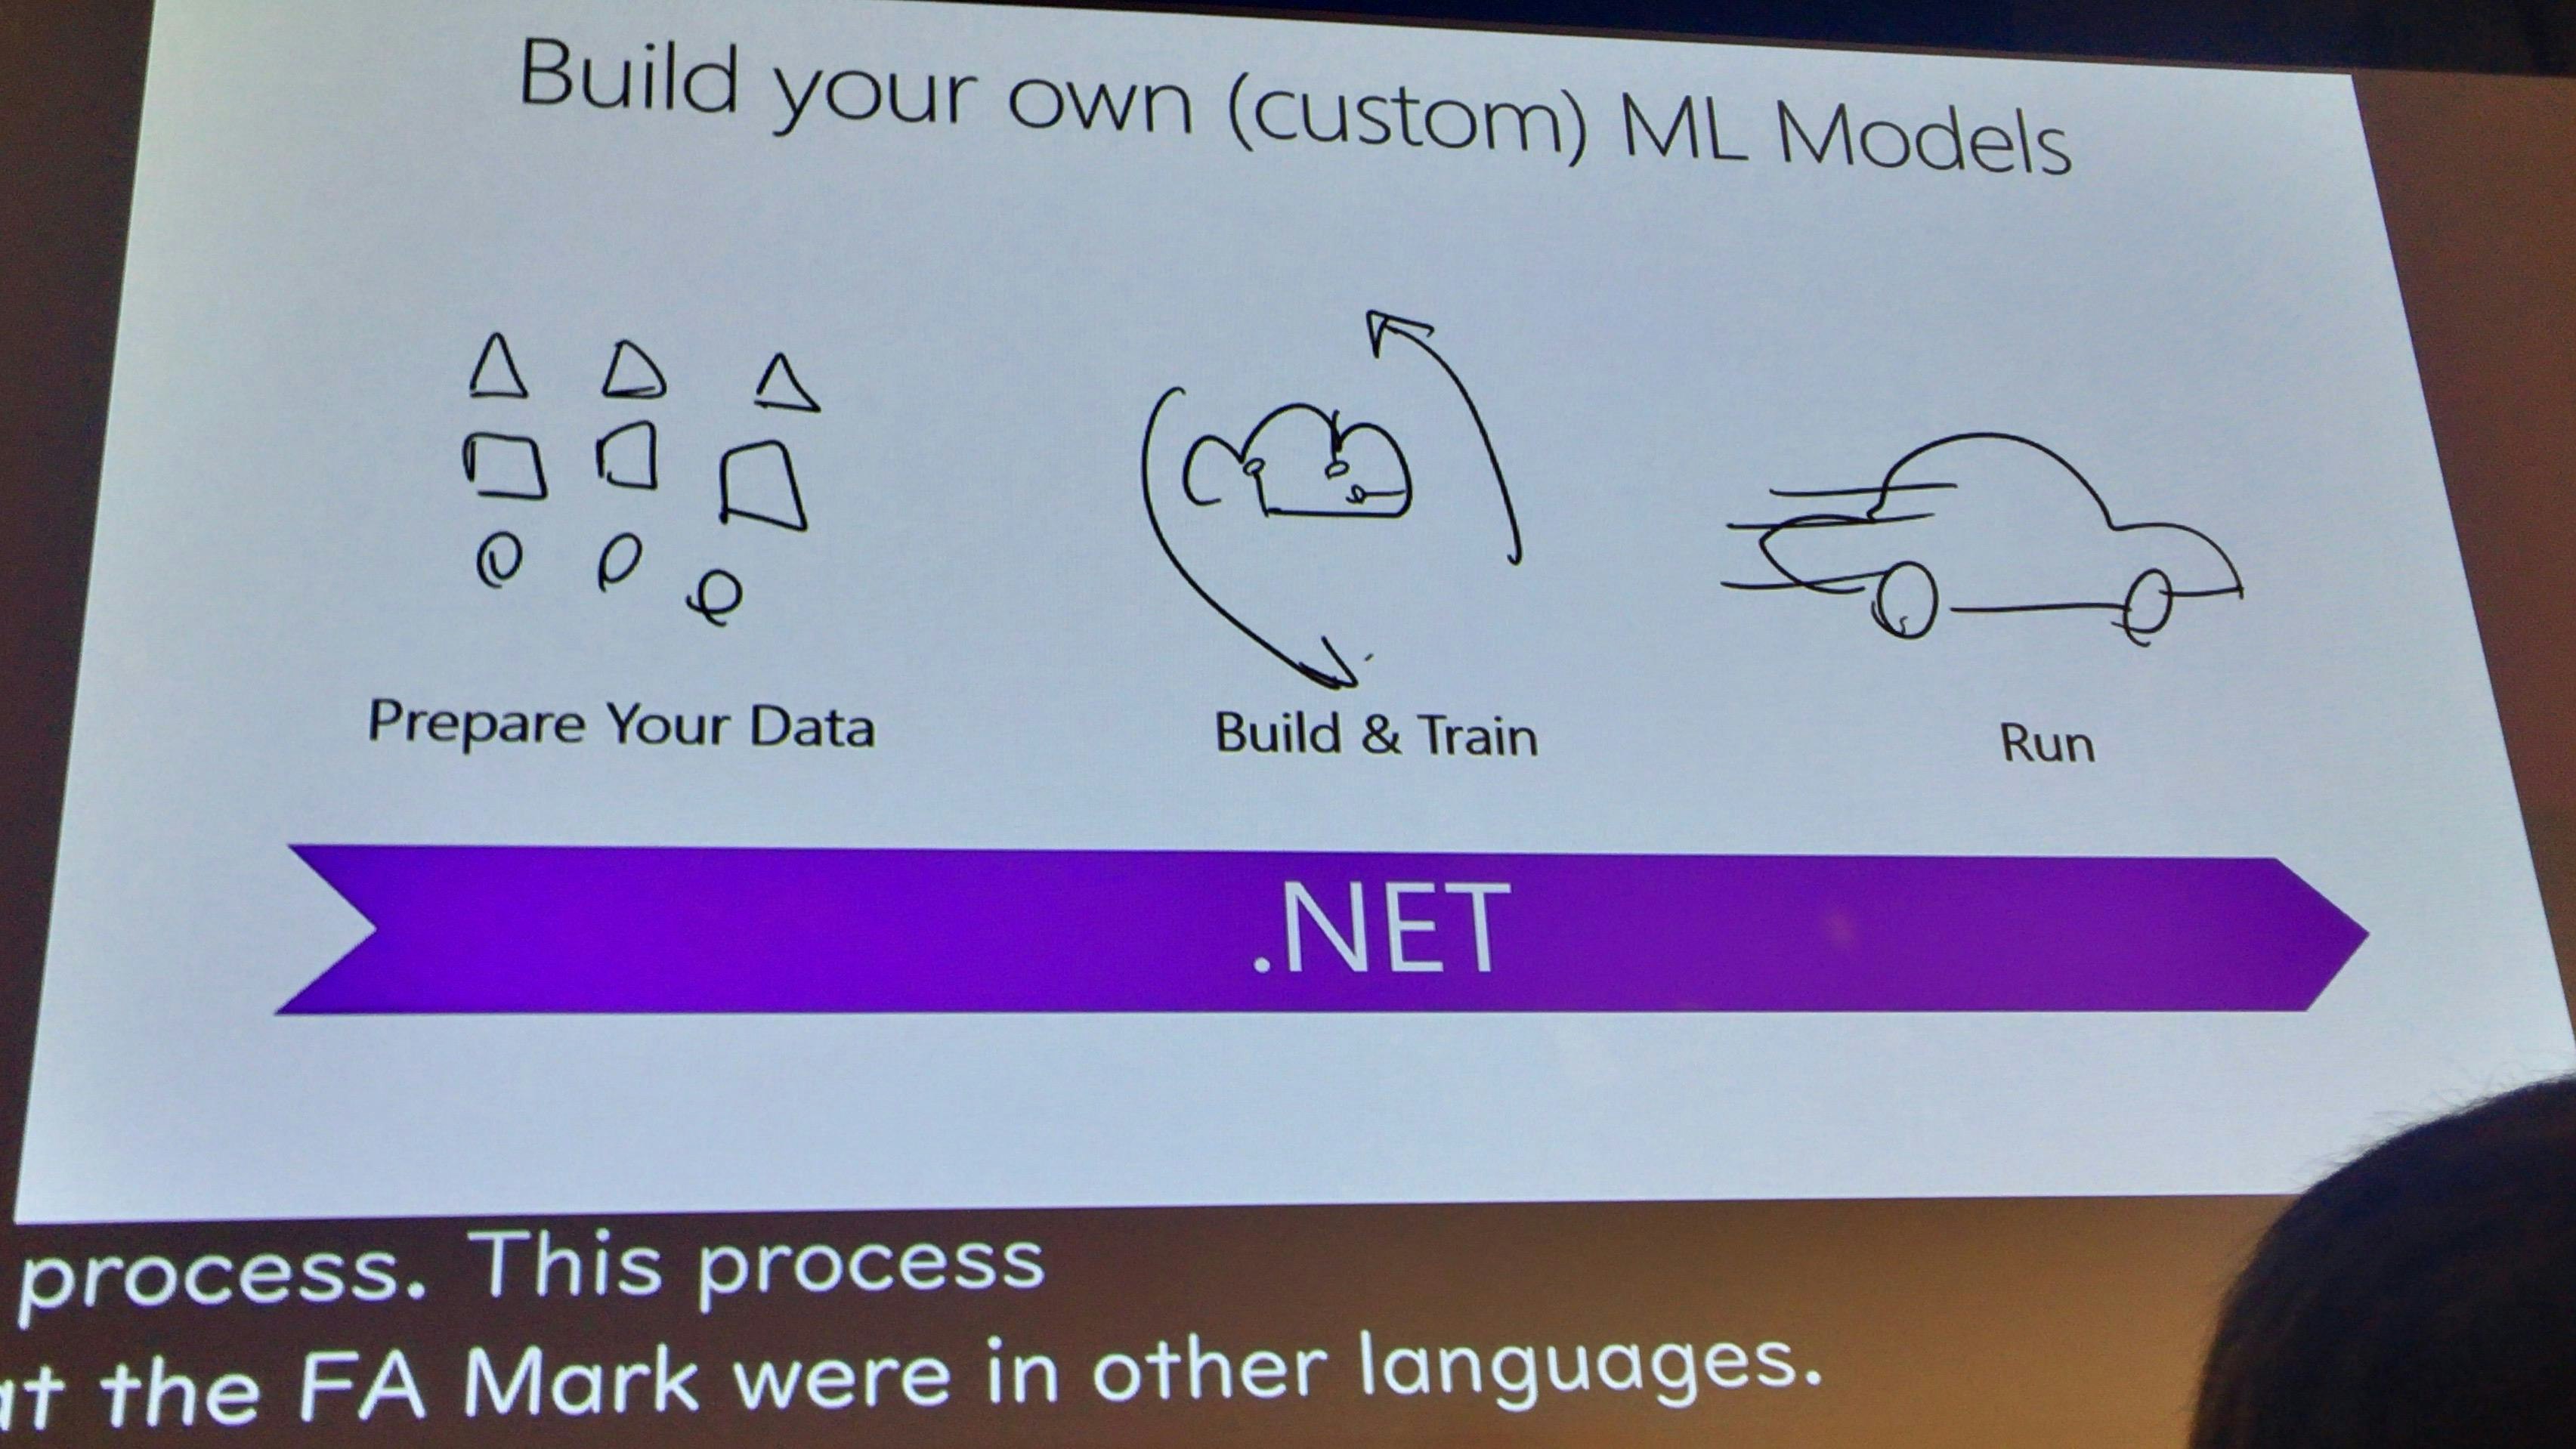 Build your own (custom) ML Models